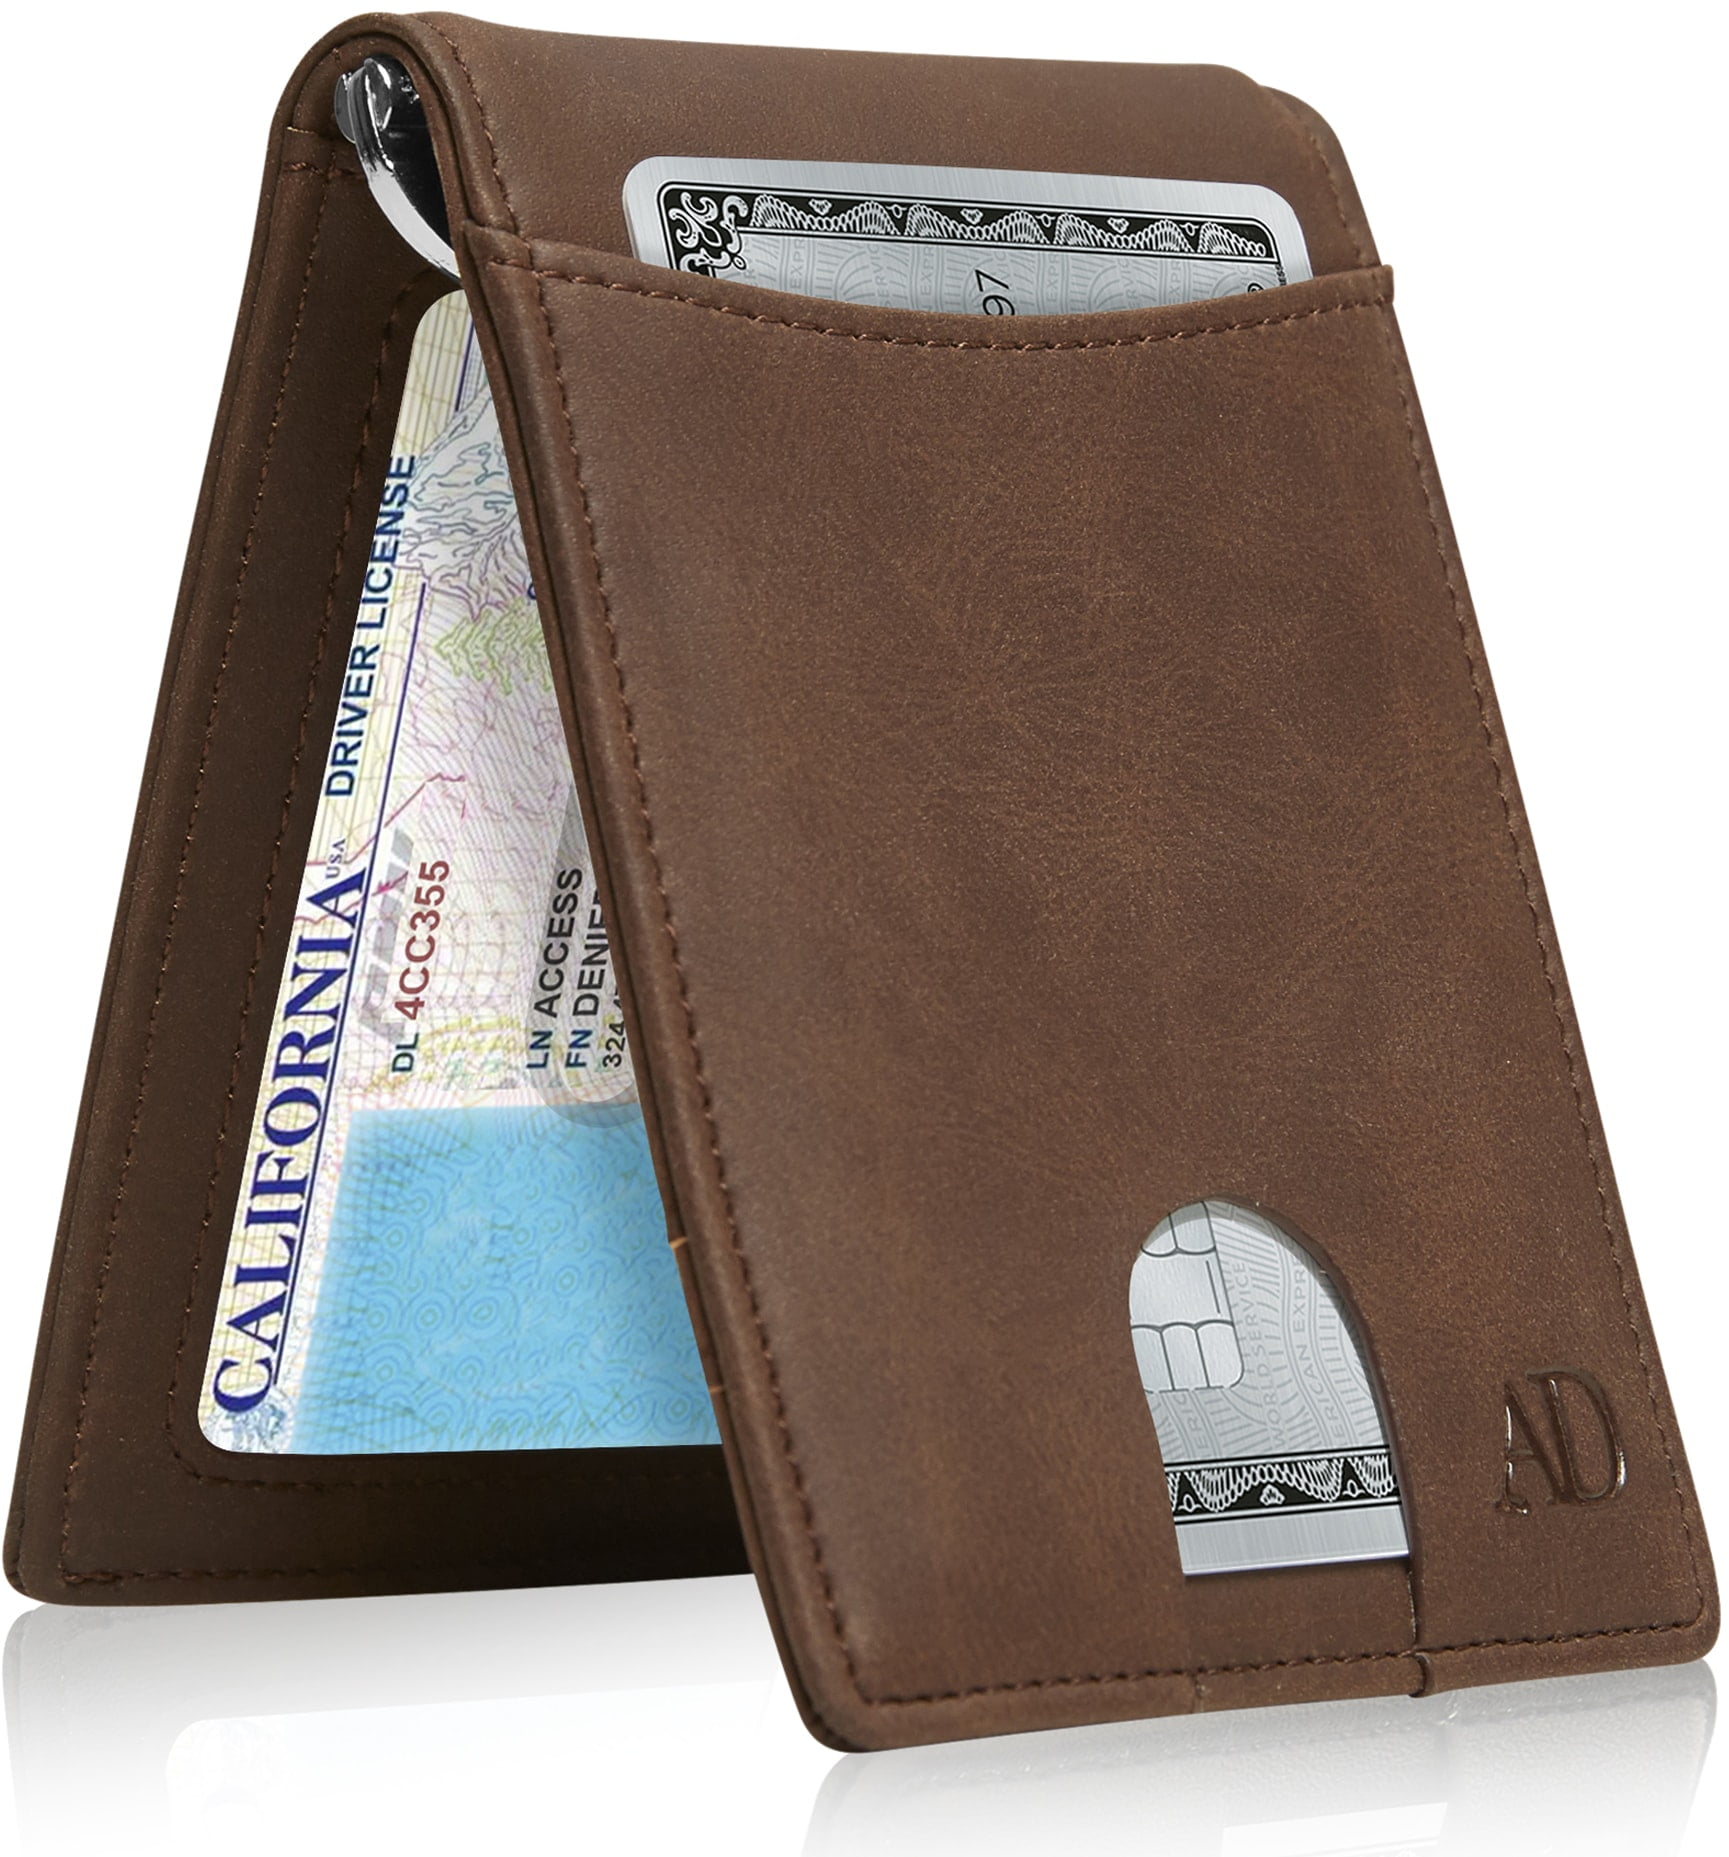 Money Clip Leather Wallets For Men-RFID Blocking Credit Card Holder Front Pocket Slim Minimalist in a Gift Box JASON